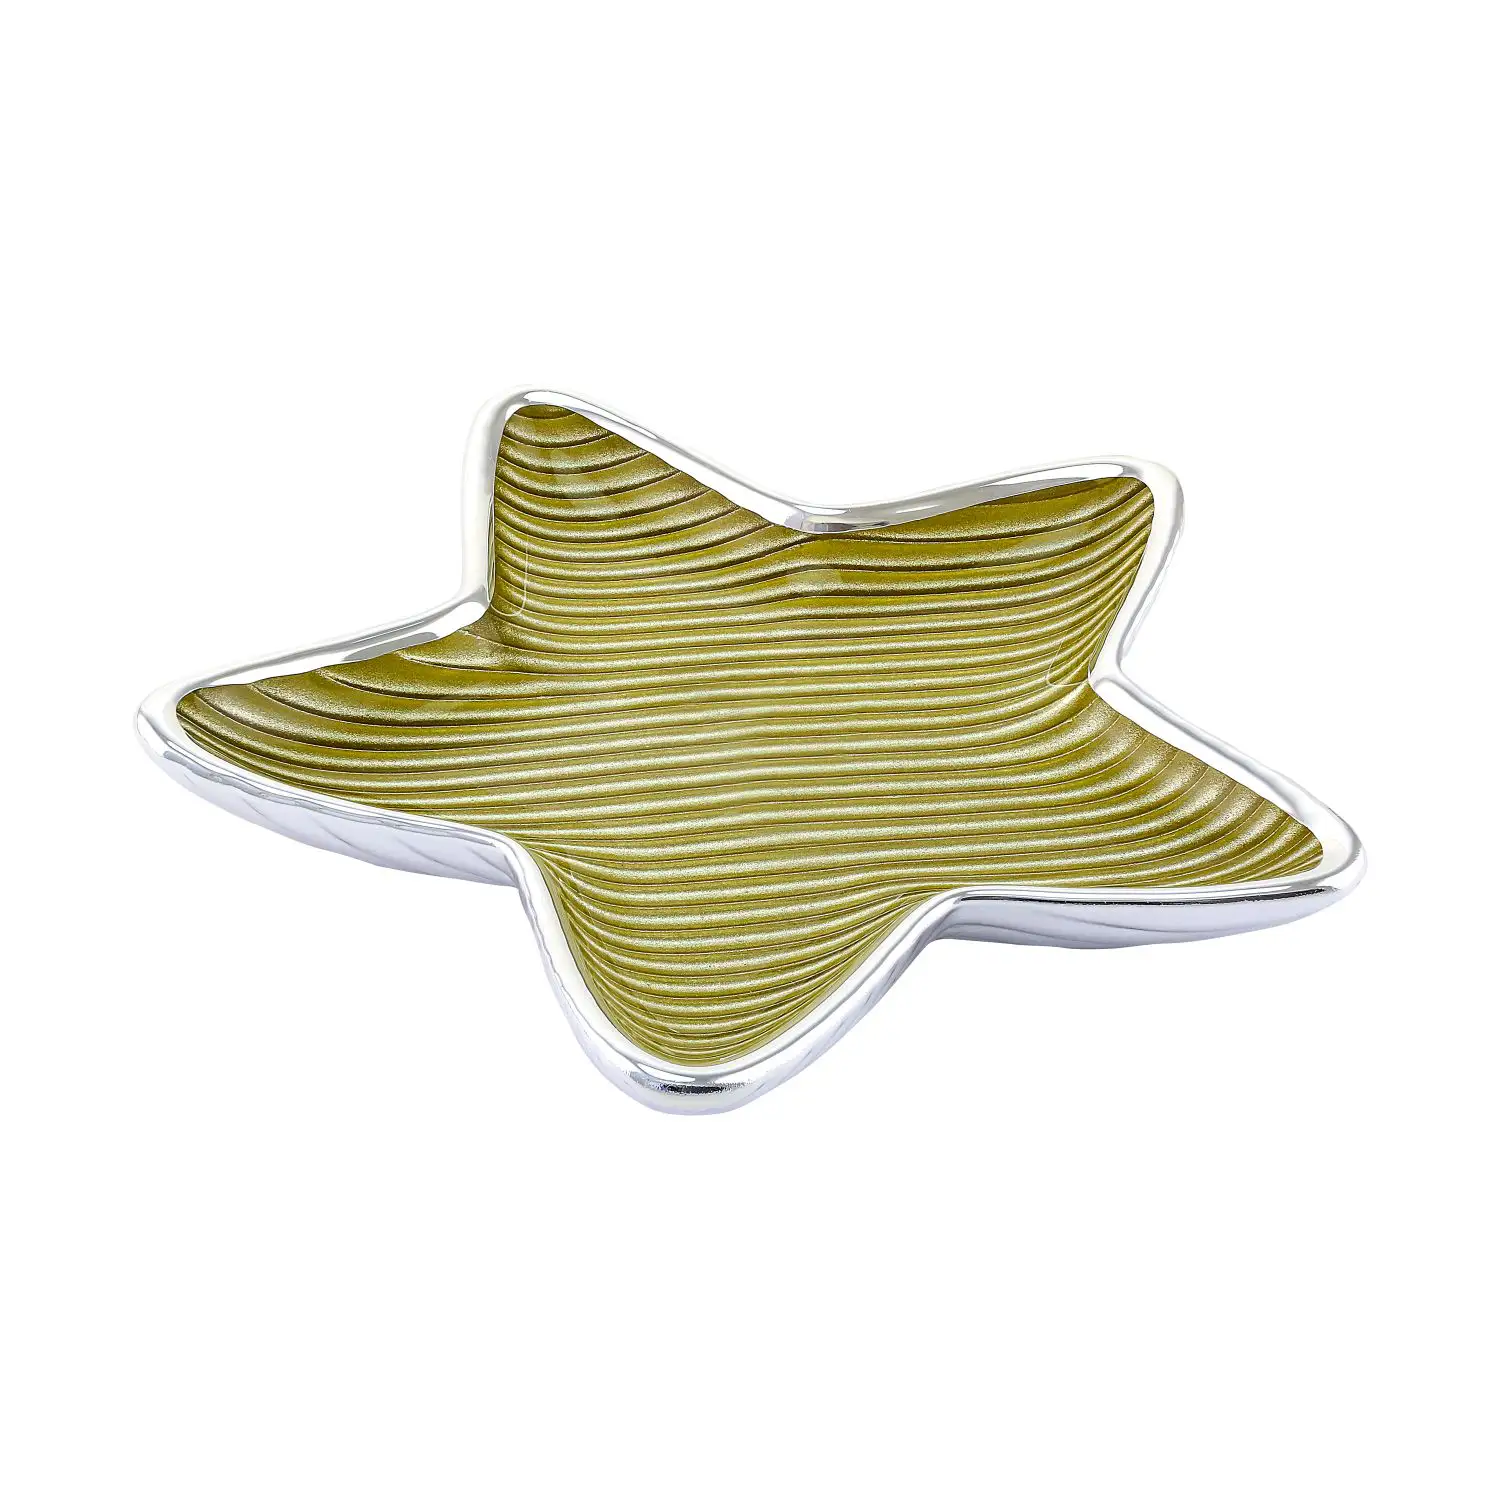 Тарелка стеклянная STELLA RIGHE (цвет золотой) диаметр 17 см тарелка стеклянная stella righe цвет золотой диаметр 17 см